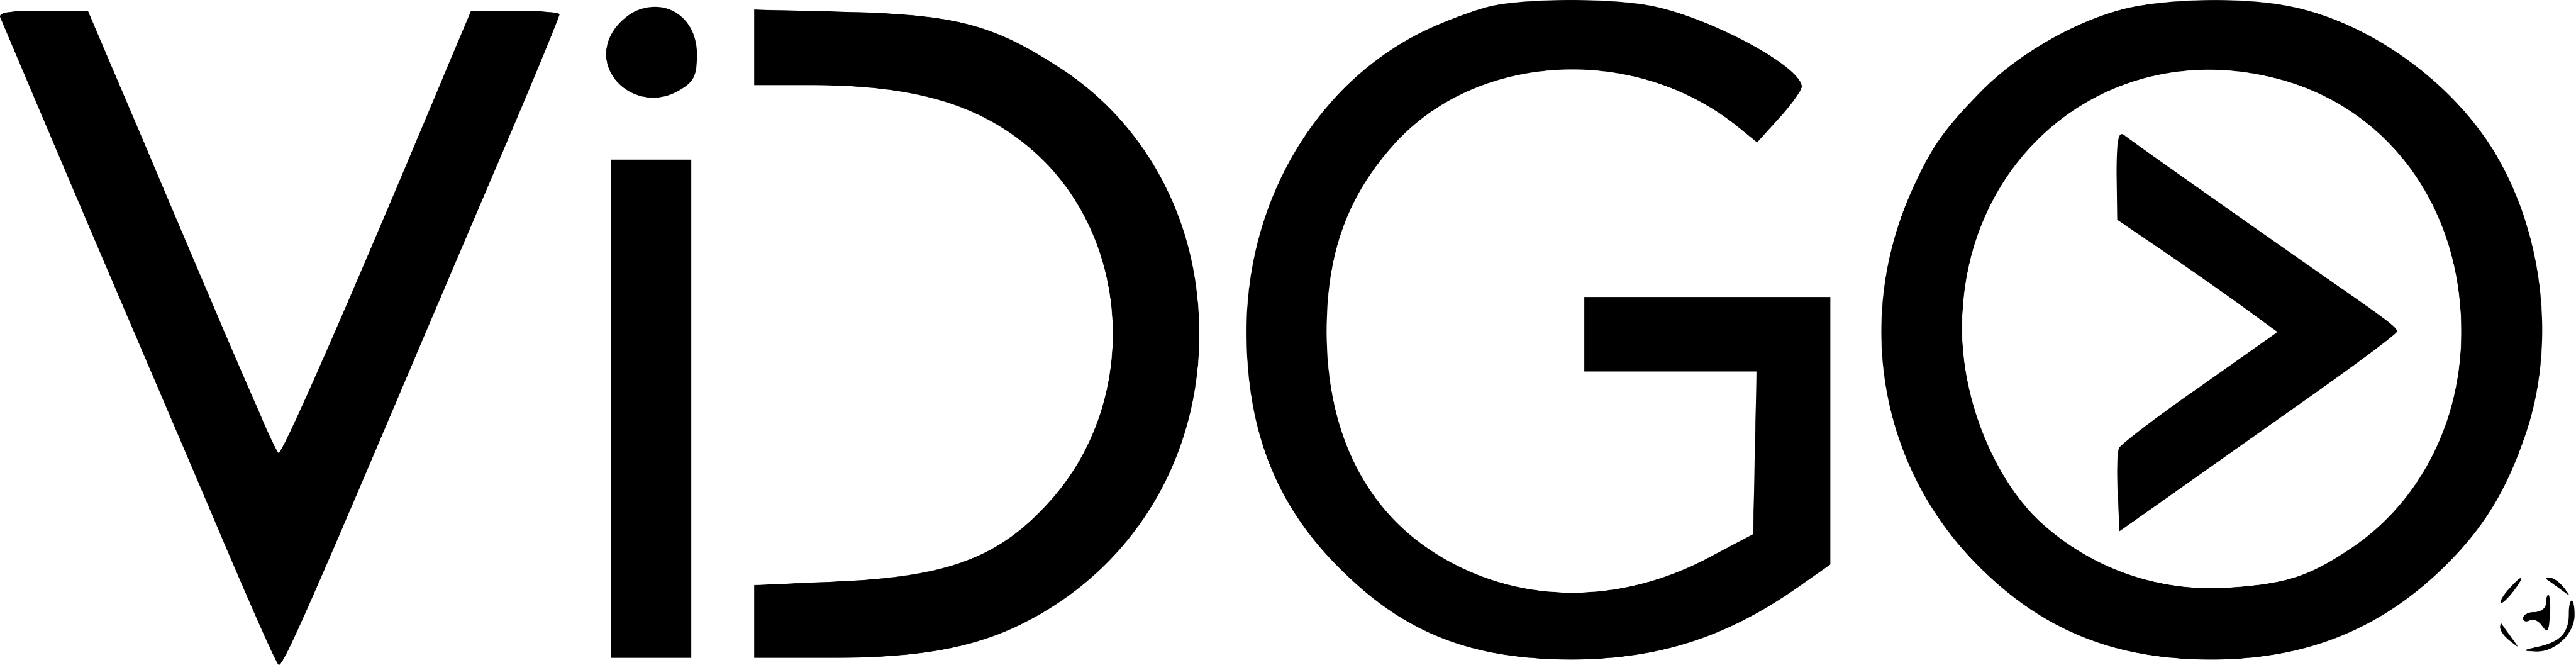 Vidgo logo